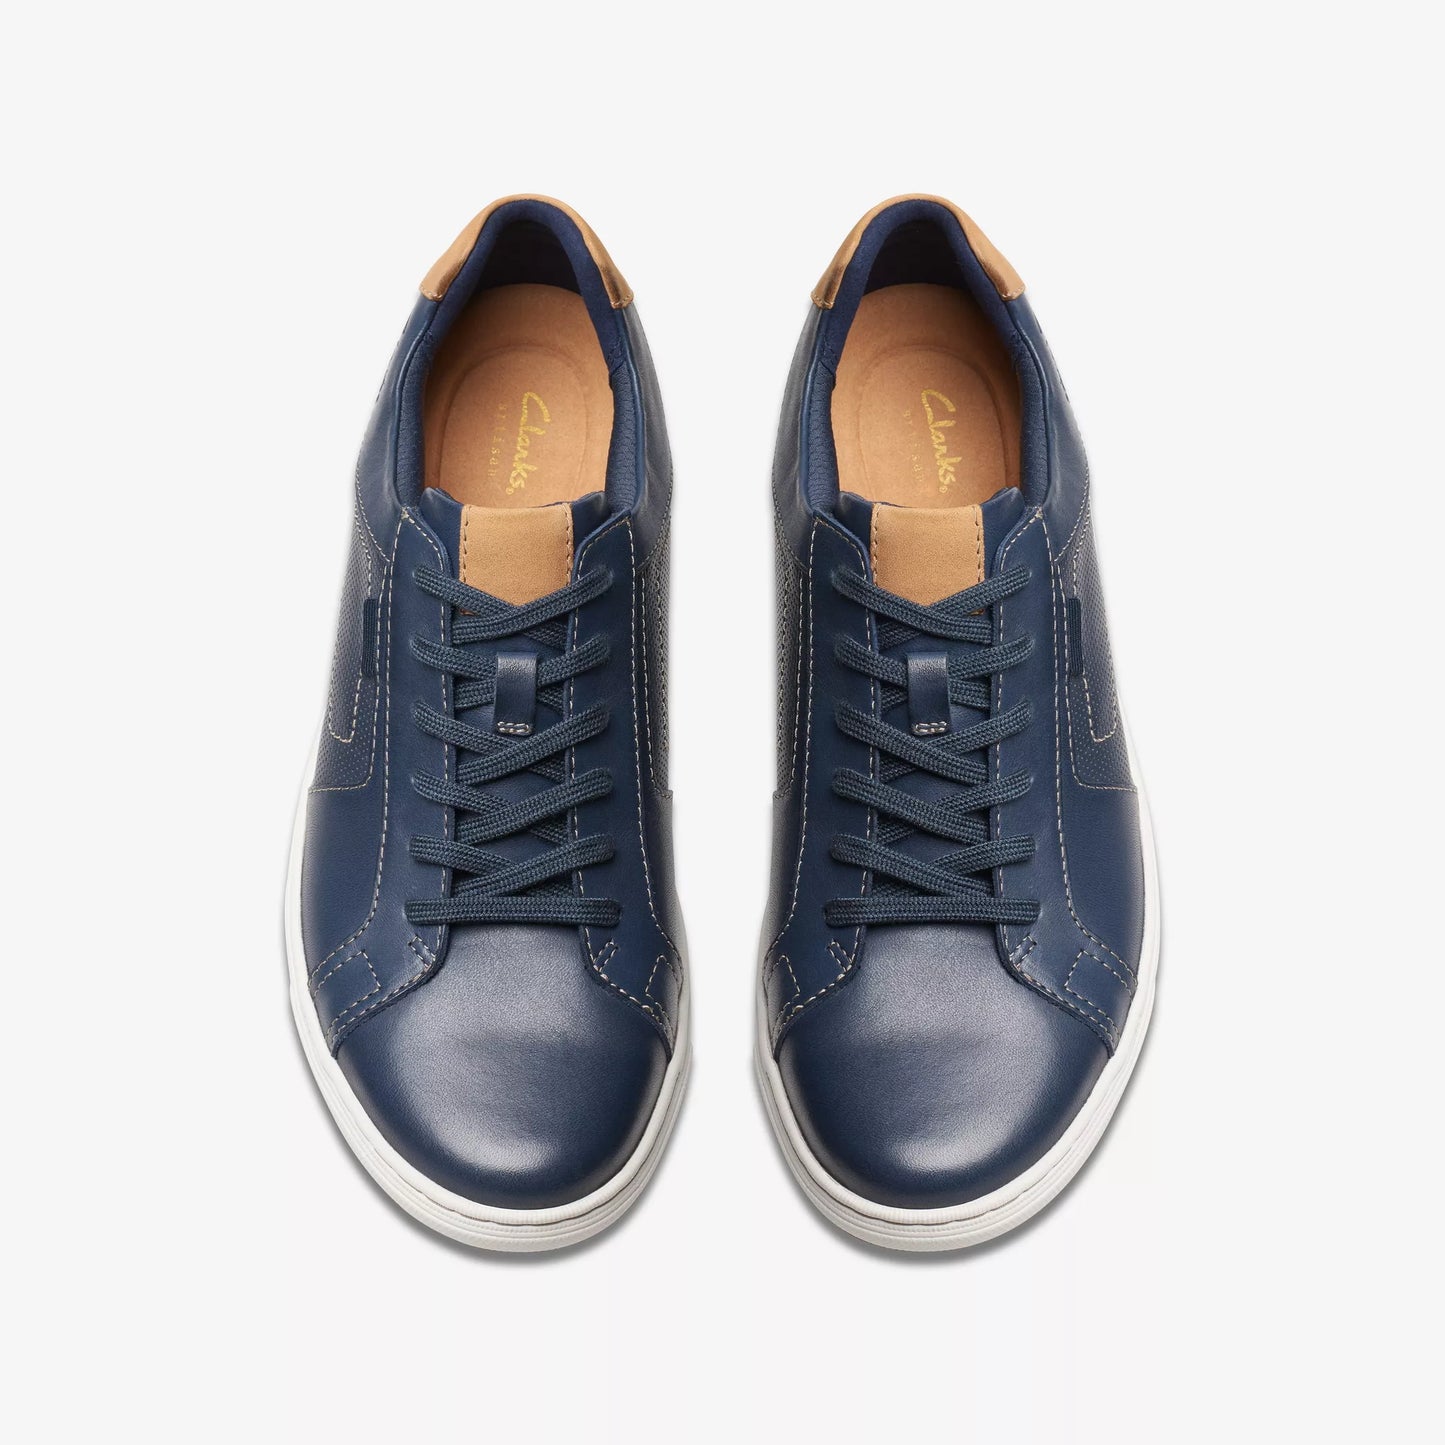 CLARKS | 男士休闲鞋 | MAPSTONE LACE NAVY LEATHER | 蓝色的